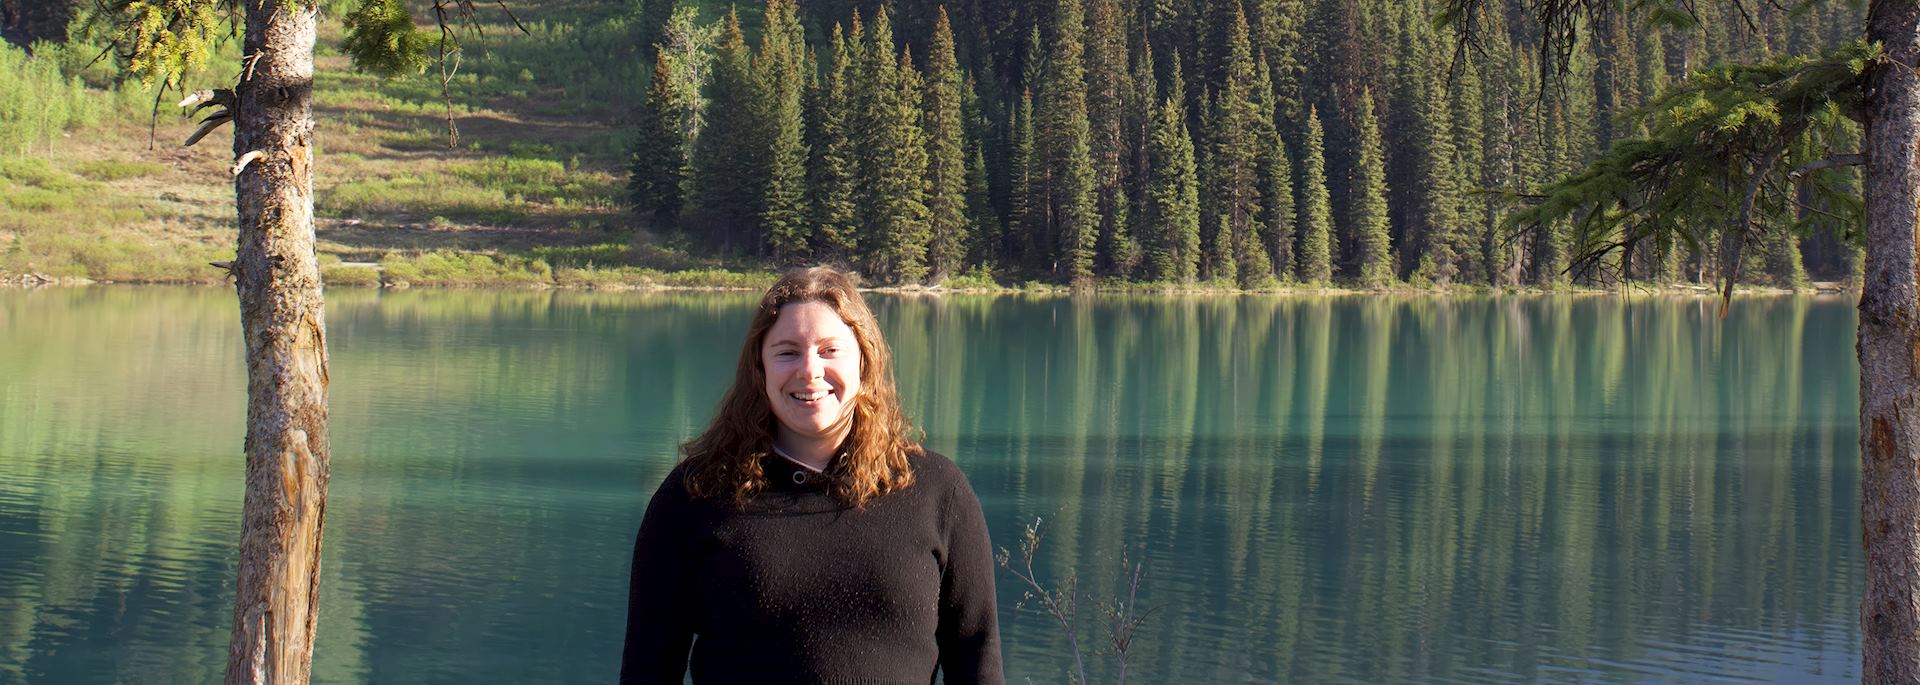 Milly visiting Emerald Lake, Alberta, Canada